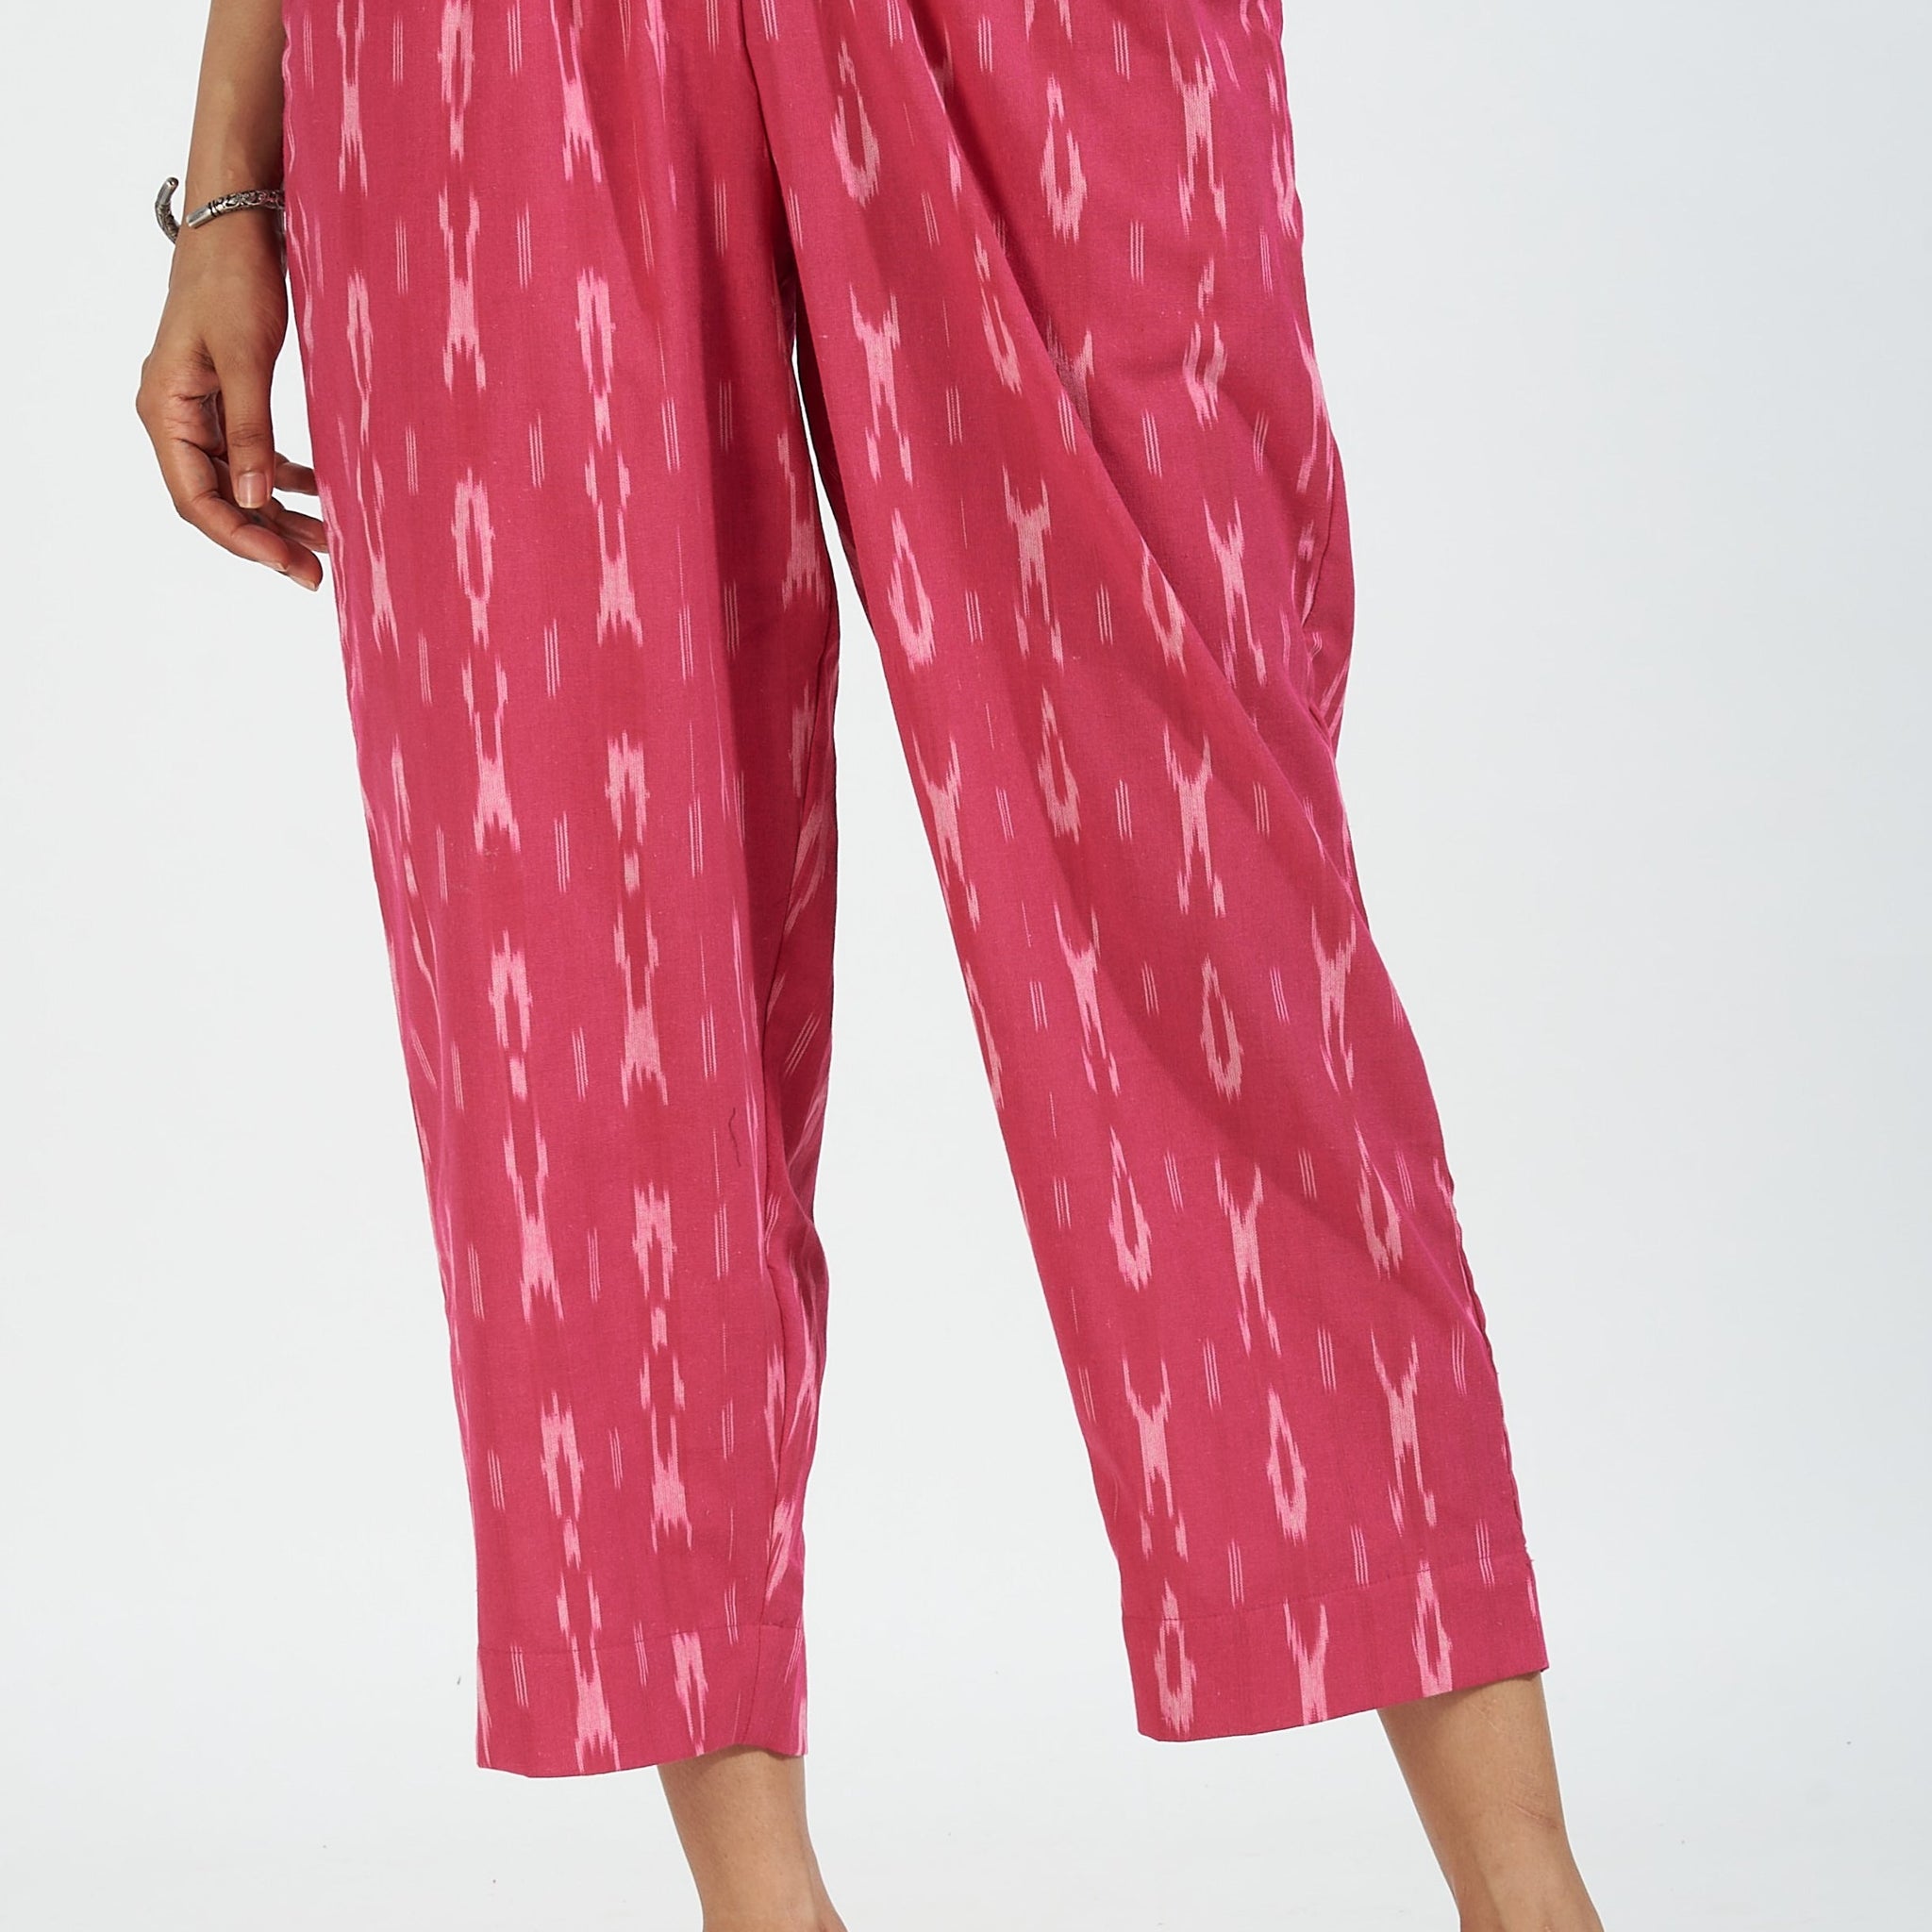 comfort fit narrow pants - dark pink ikat